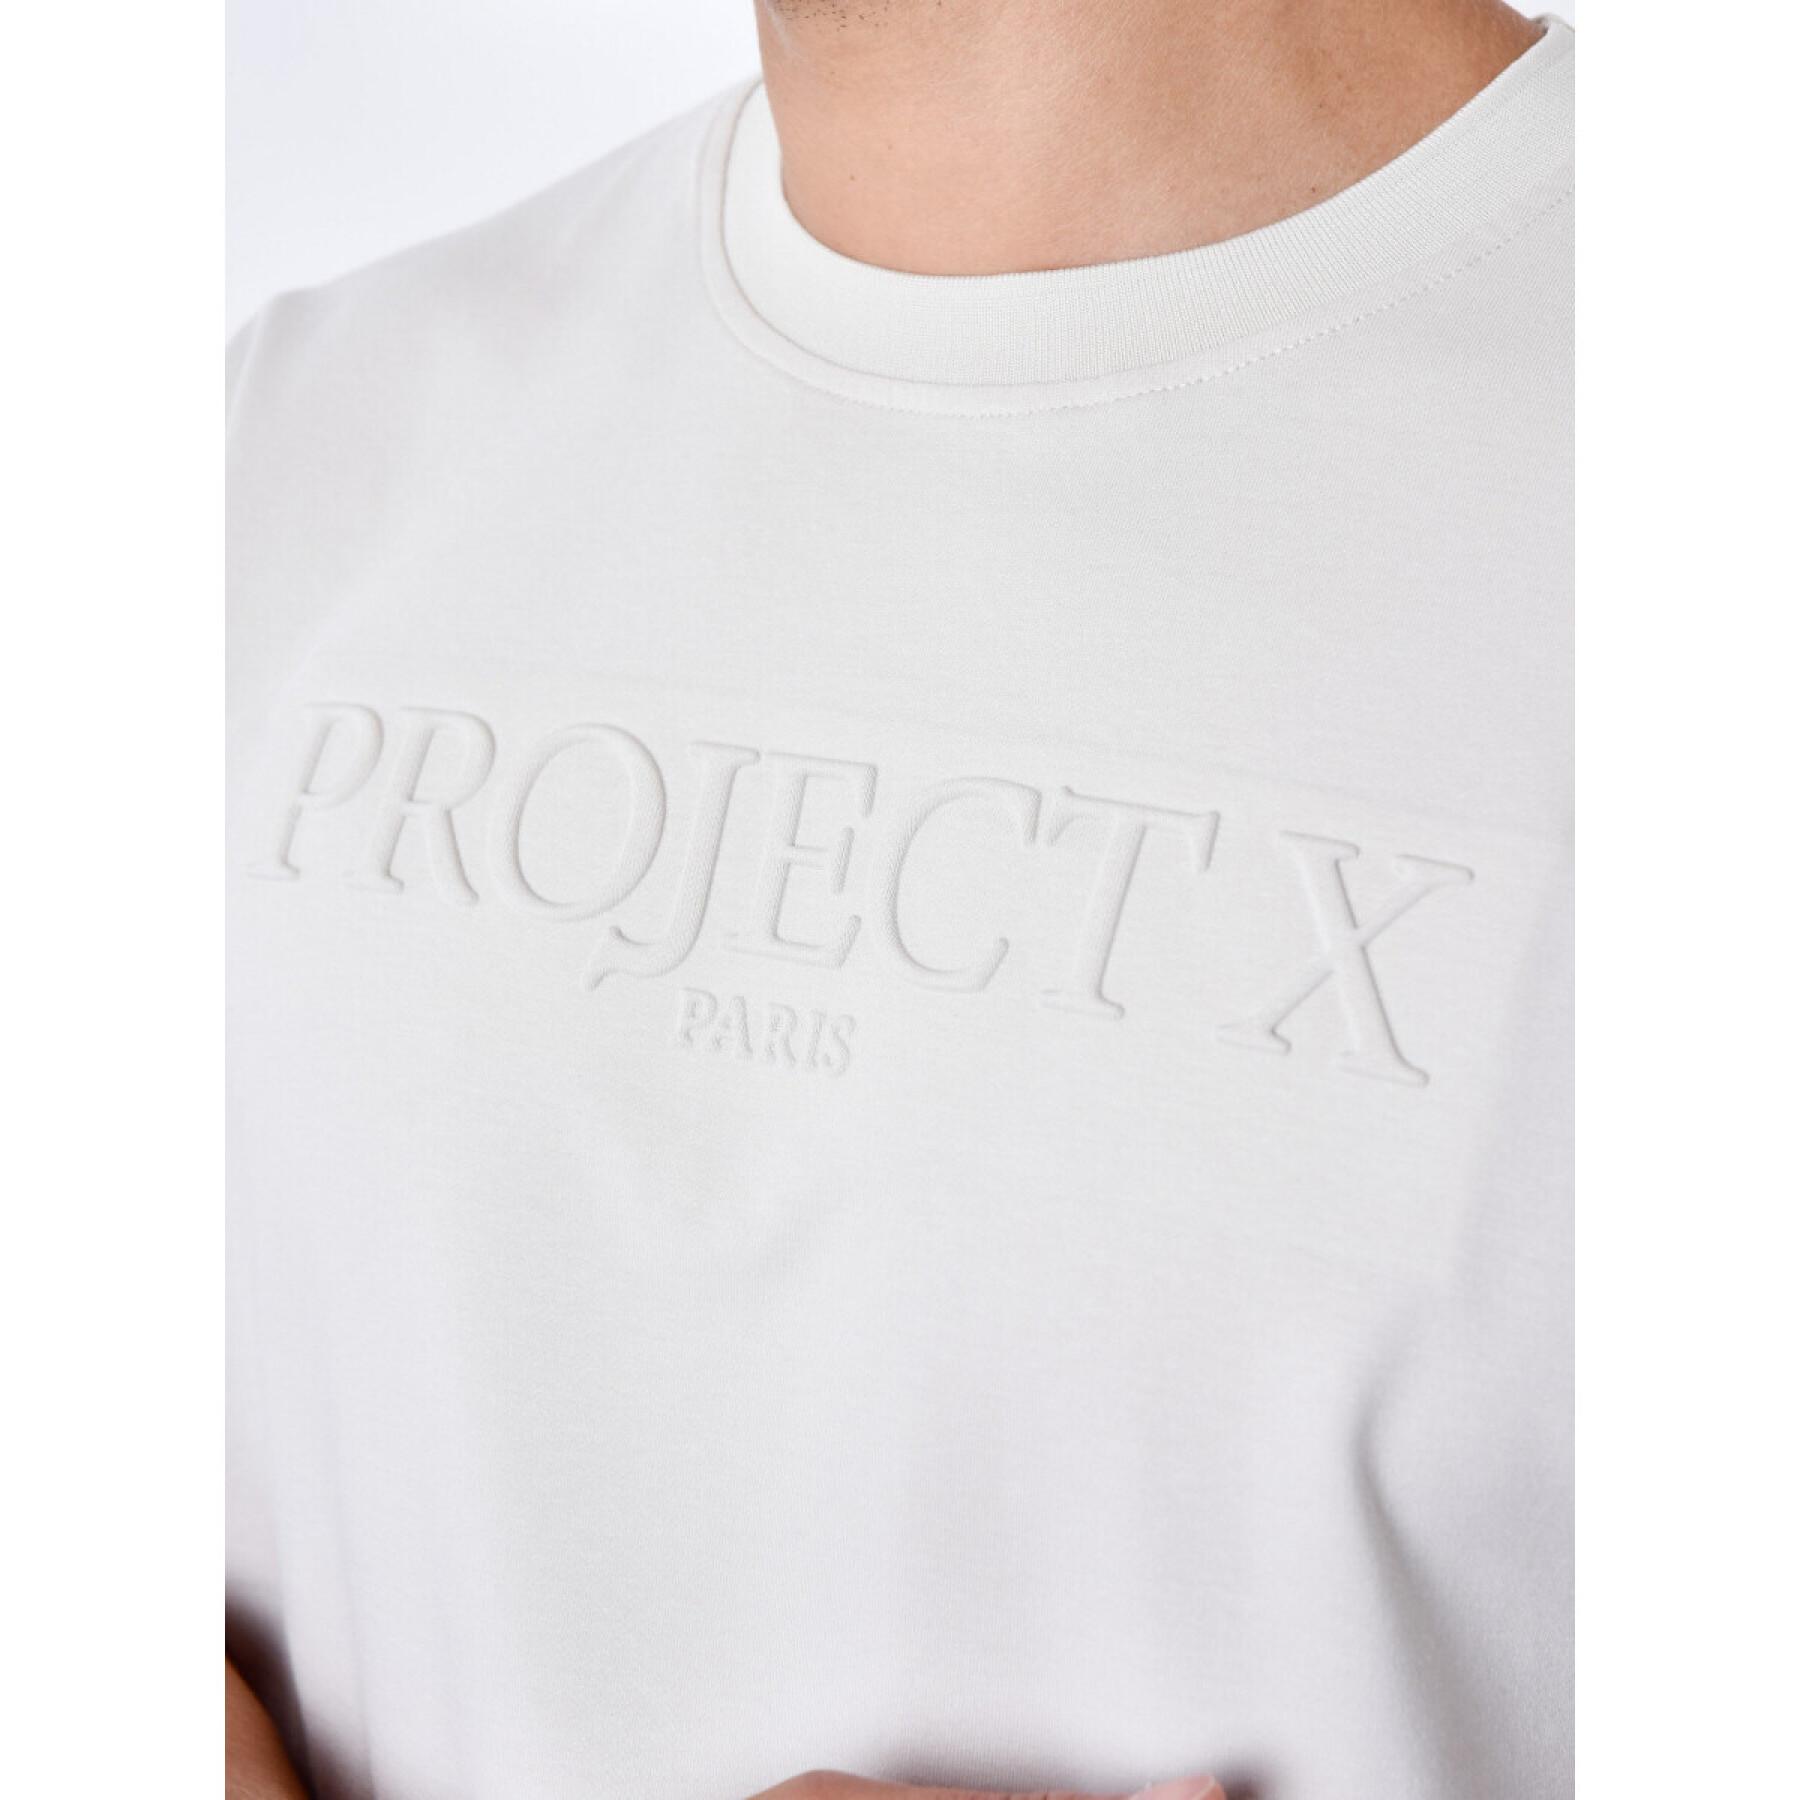 Maglietta in rilievo Project X Paris